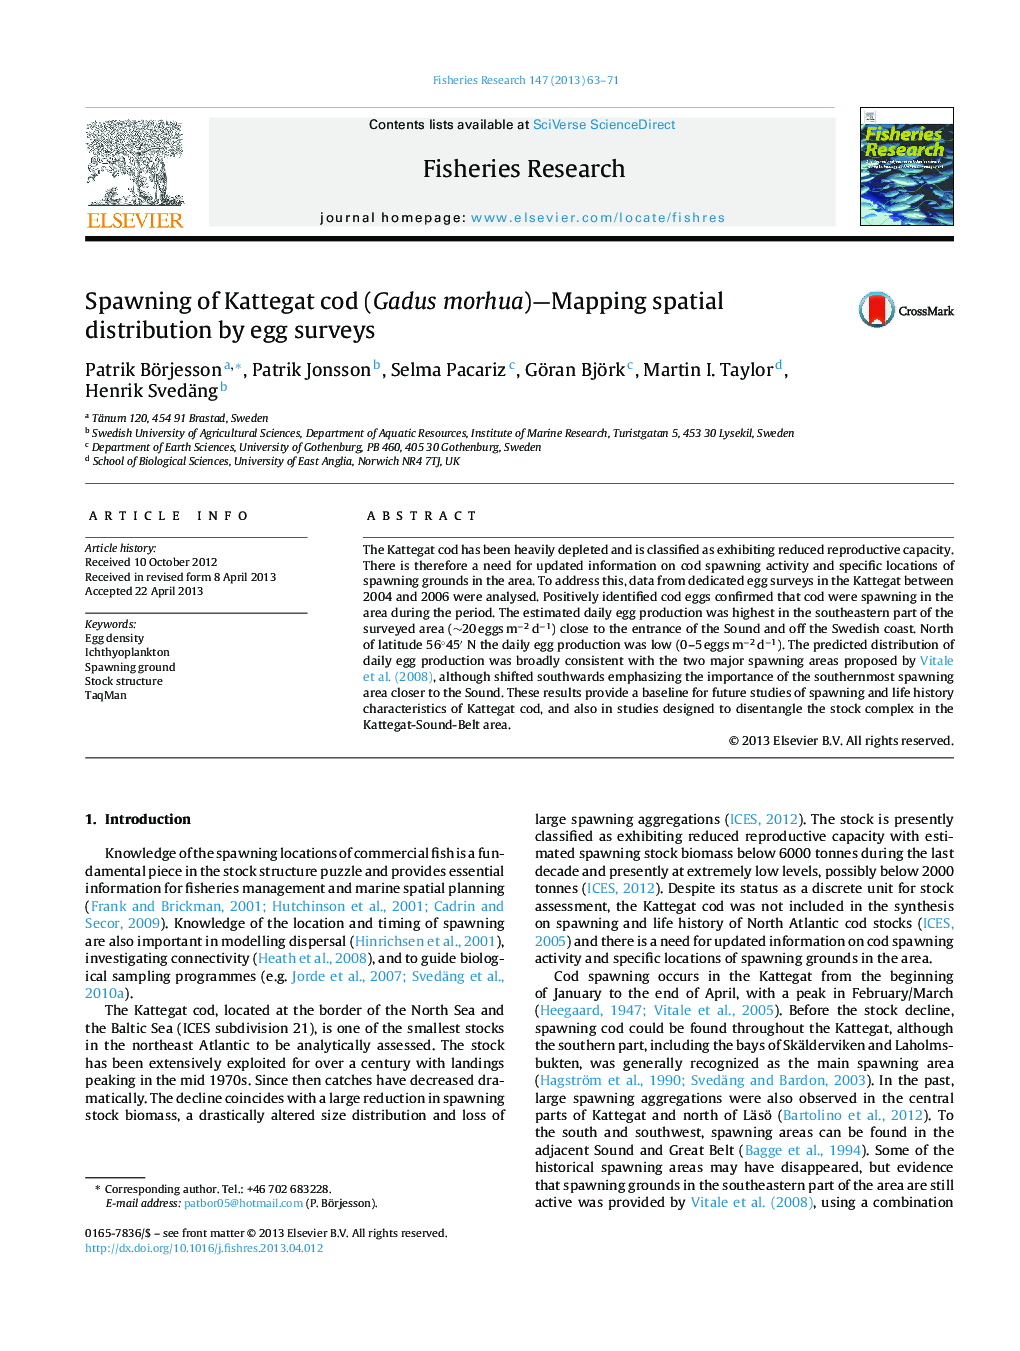 Spawning of Kattegat cod (Gadus morhua)—Mapping spatial distribution by egg surveys